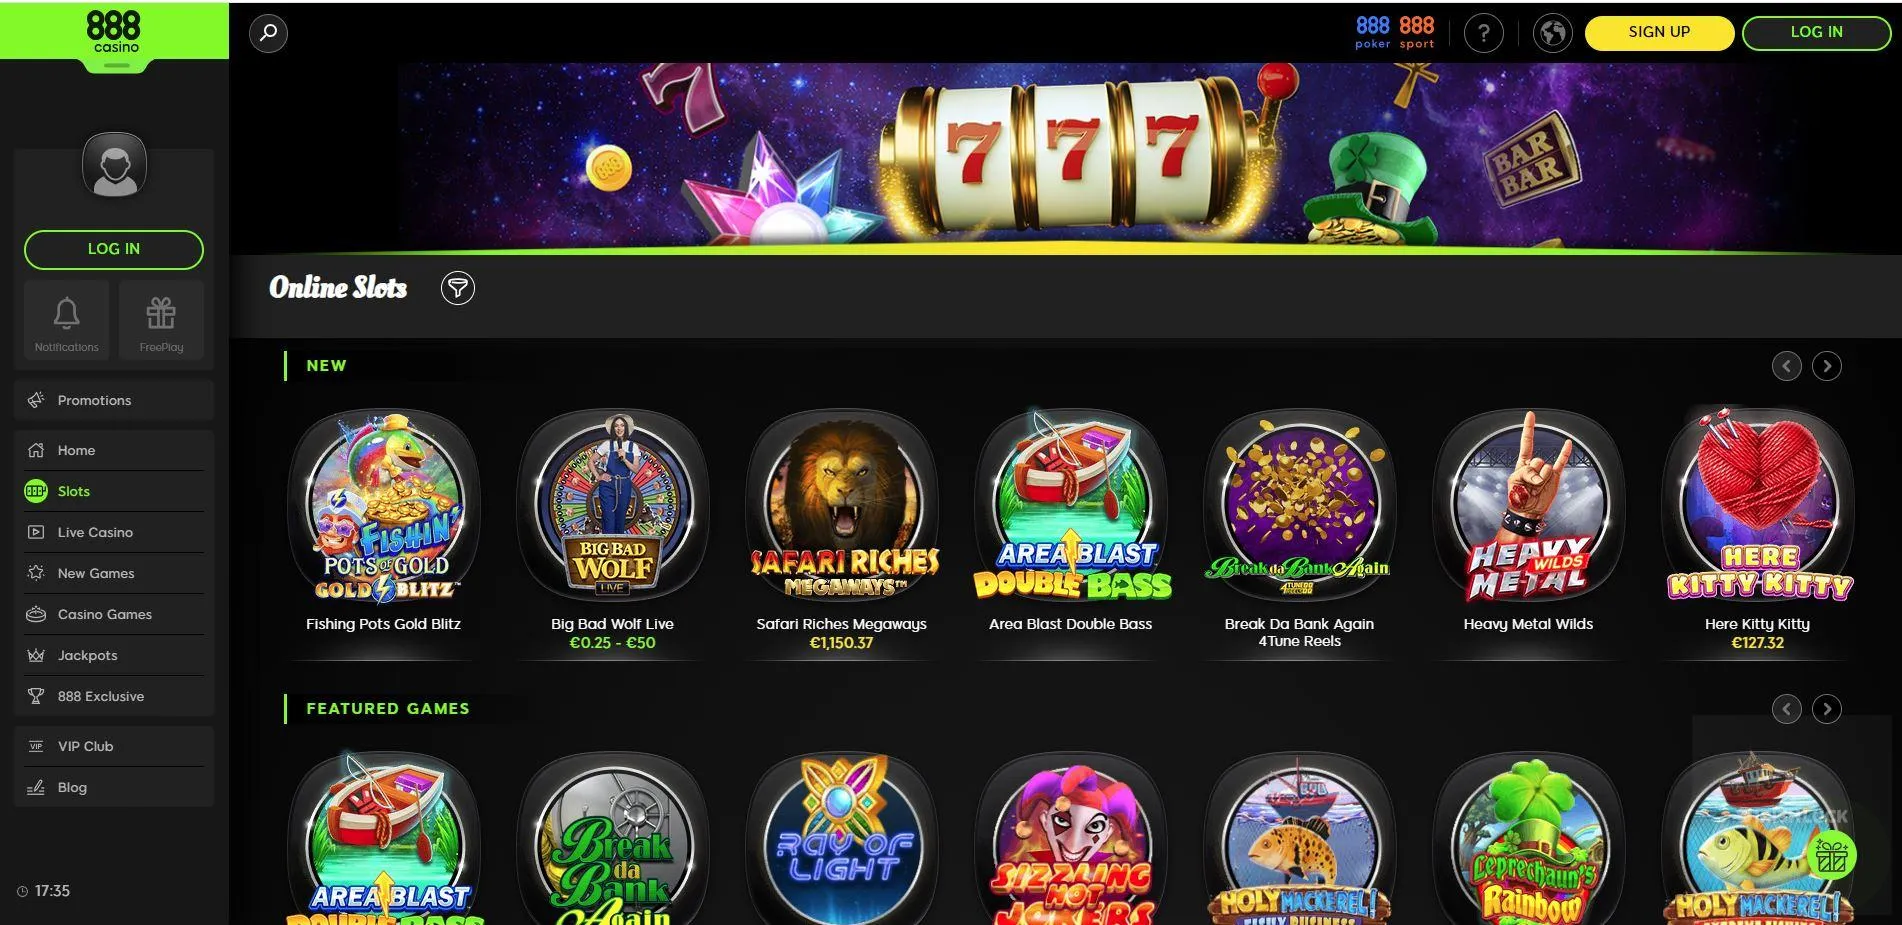 888 casino mobile casino free spins apps ireland